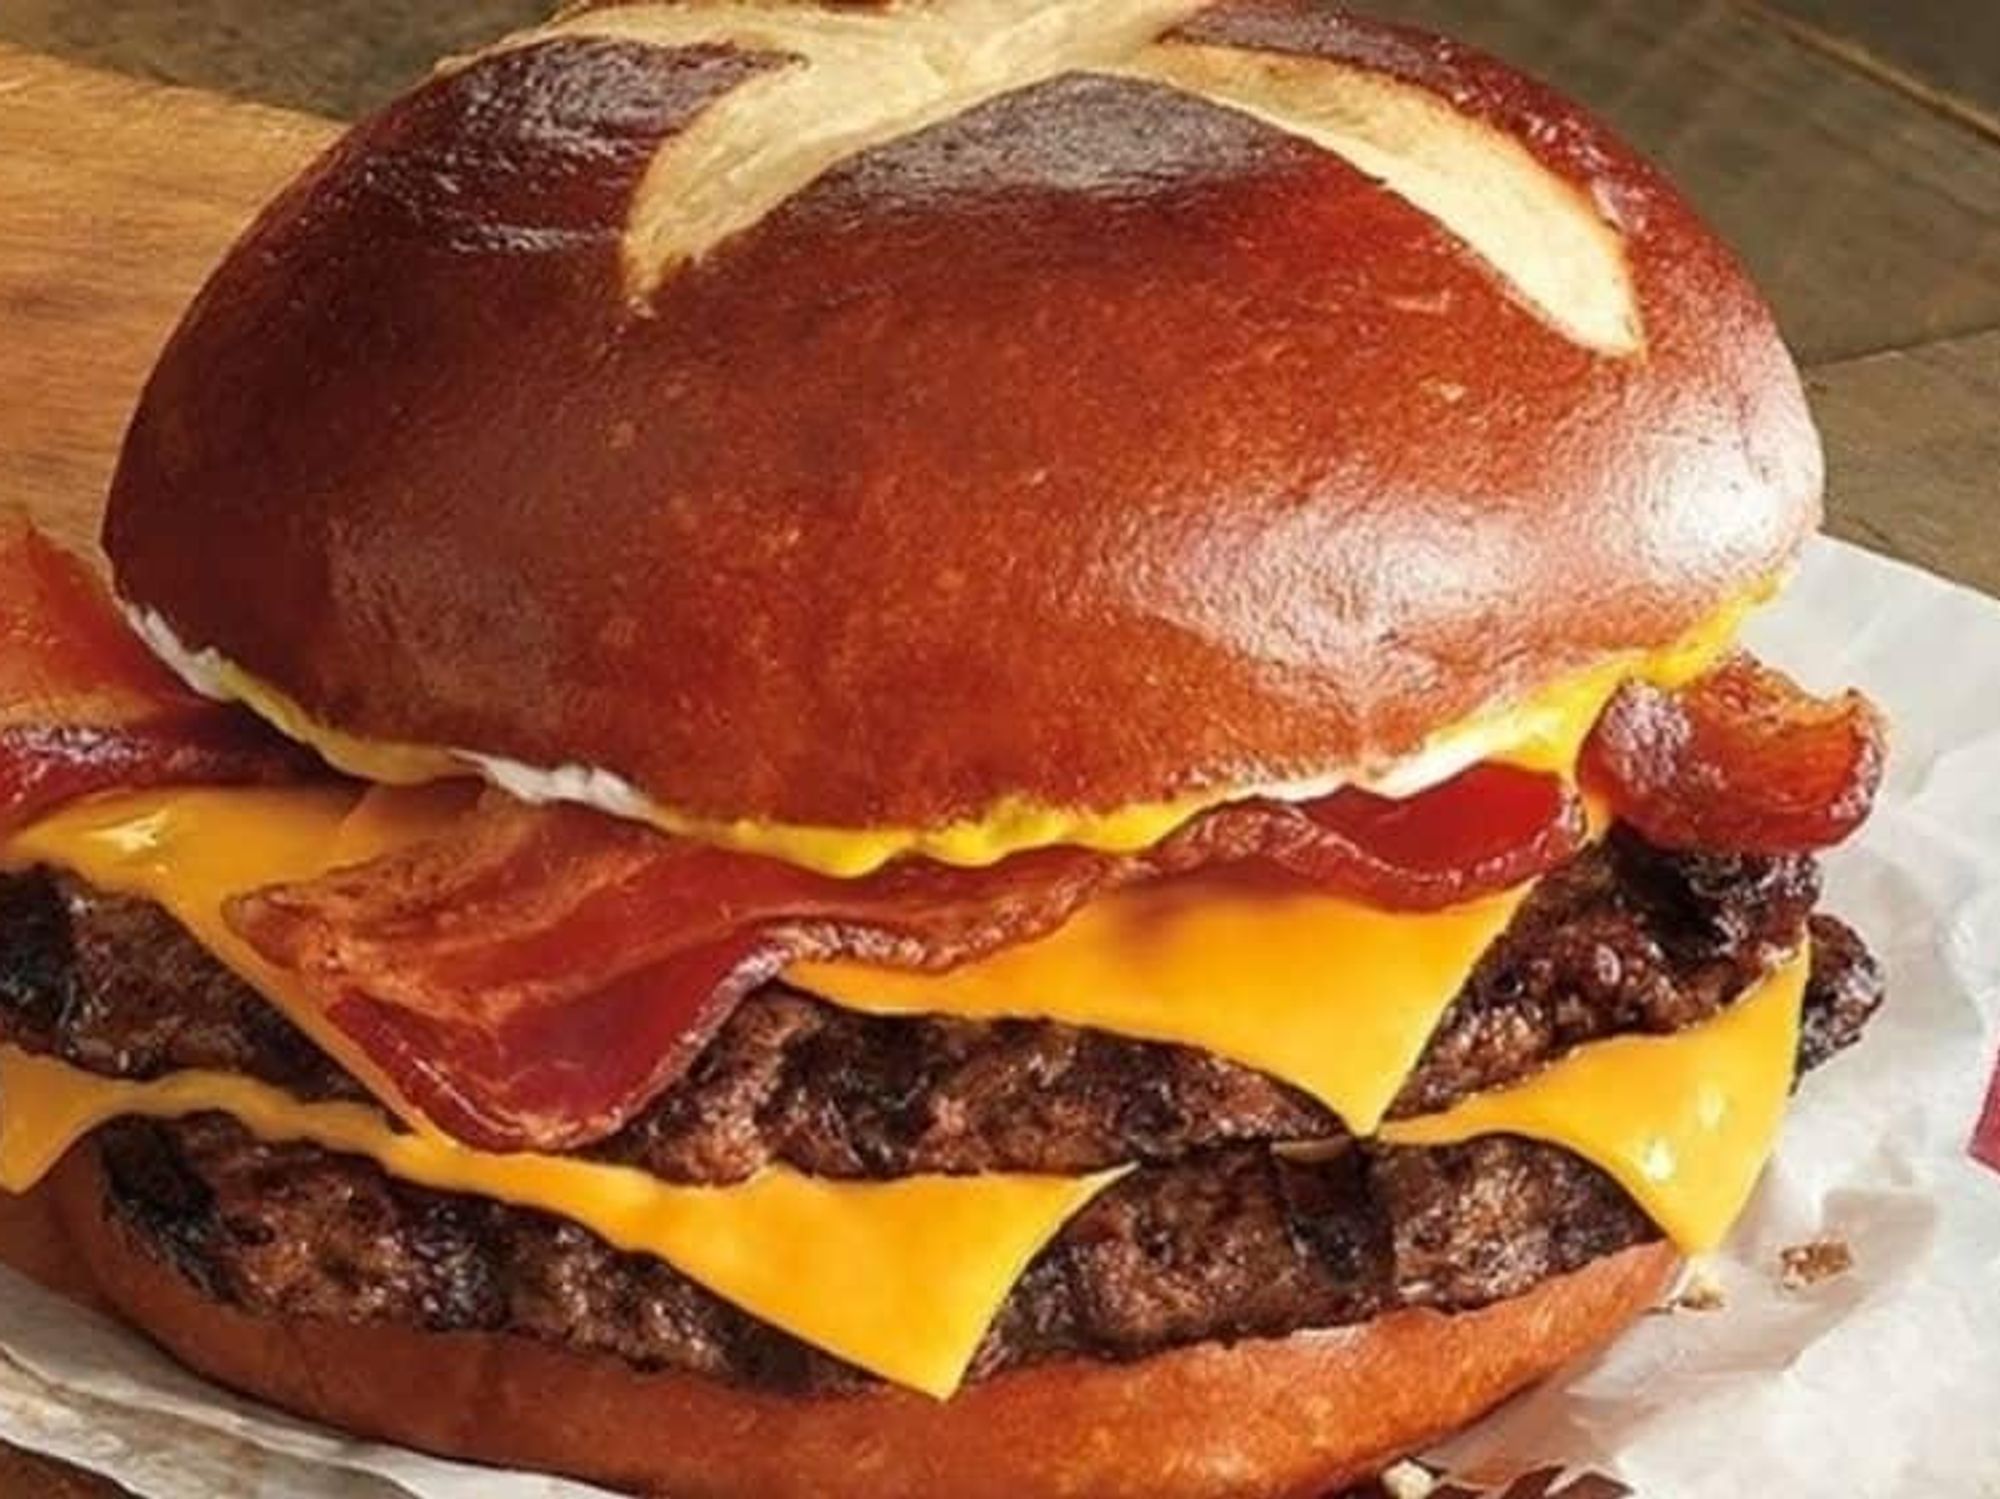 Drive-thru Gourmet Burger King Pretzel King